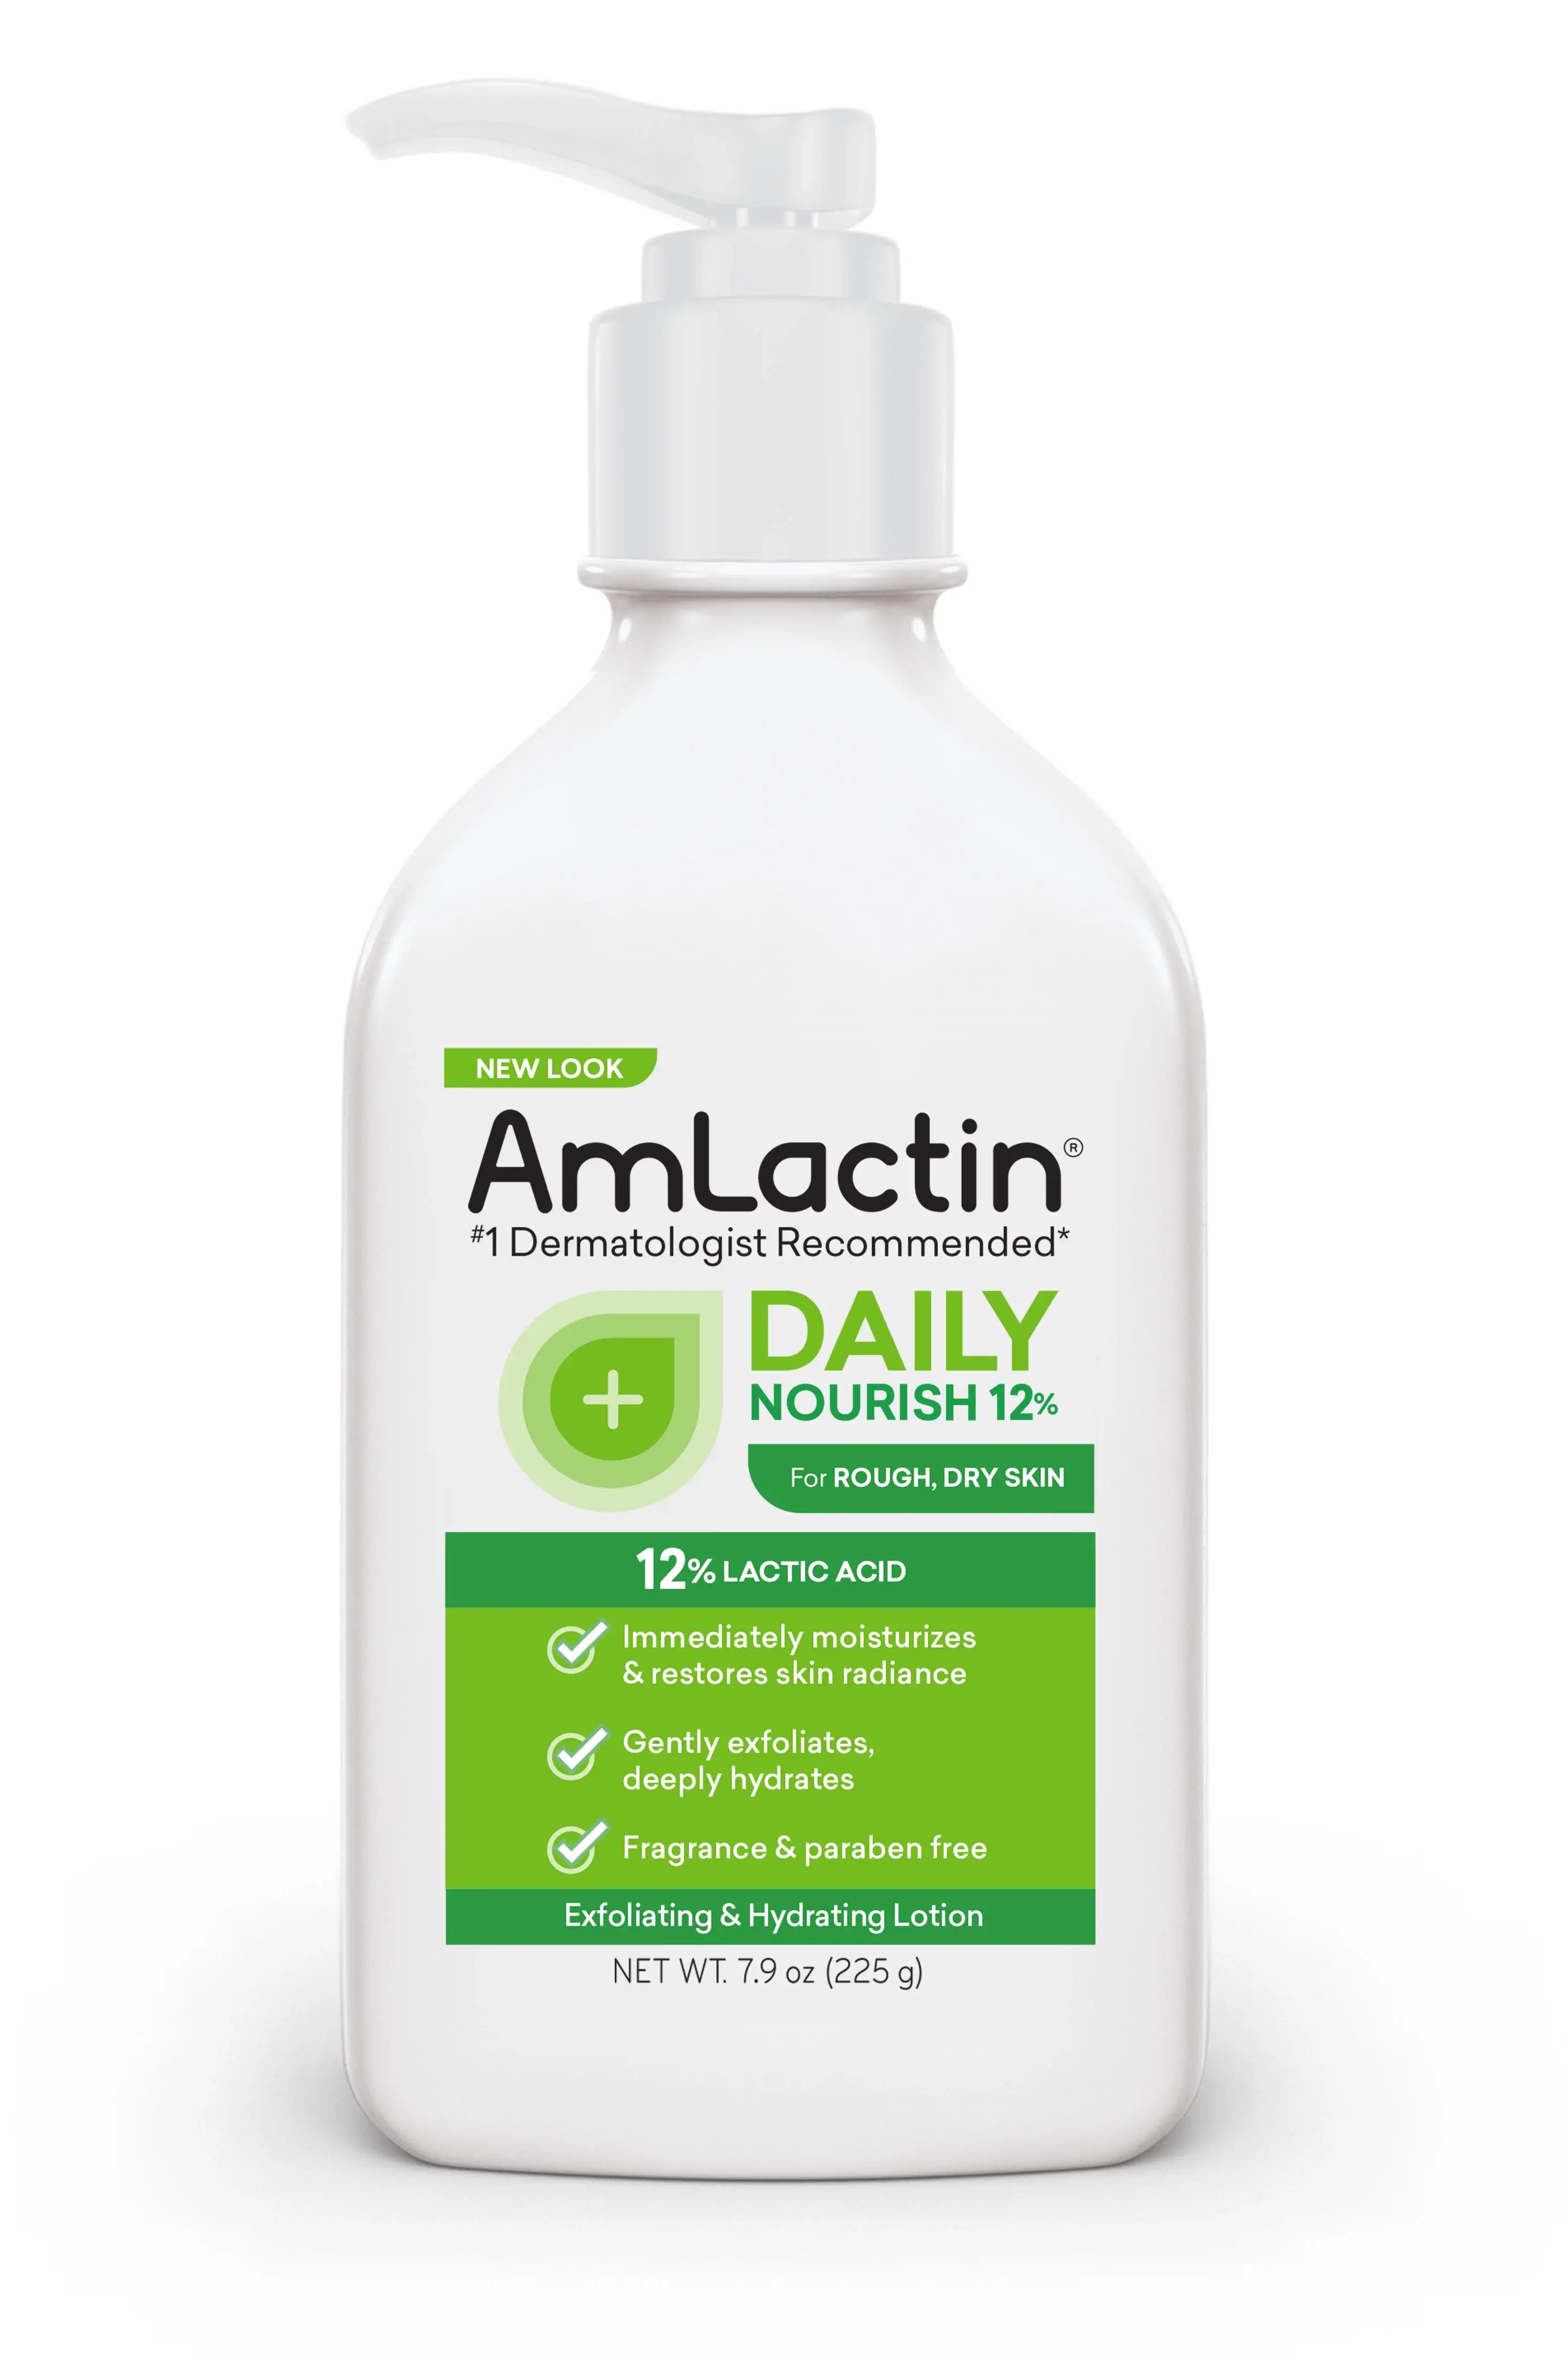 Amlactin Daily Nourish Lotion with 12% Lactic Acid